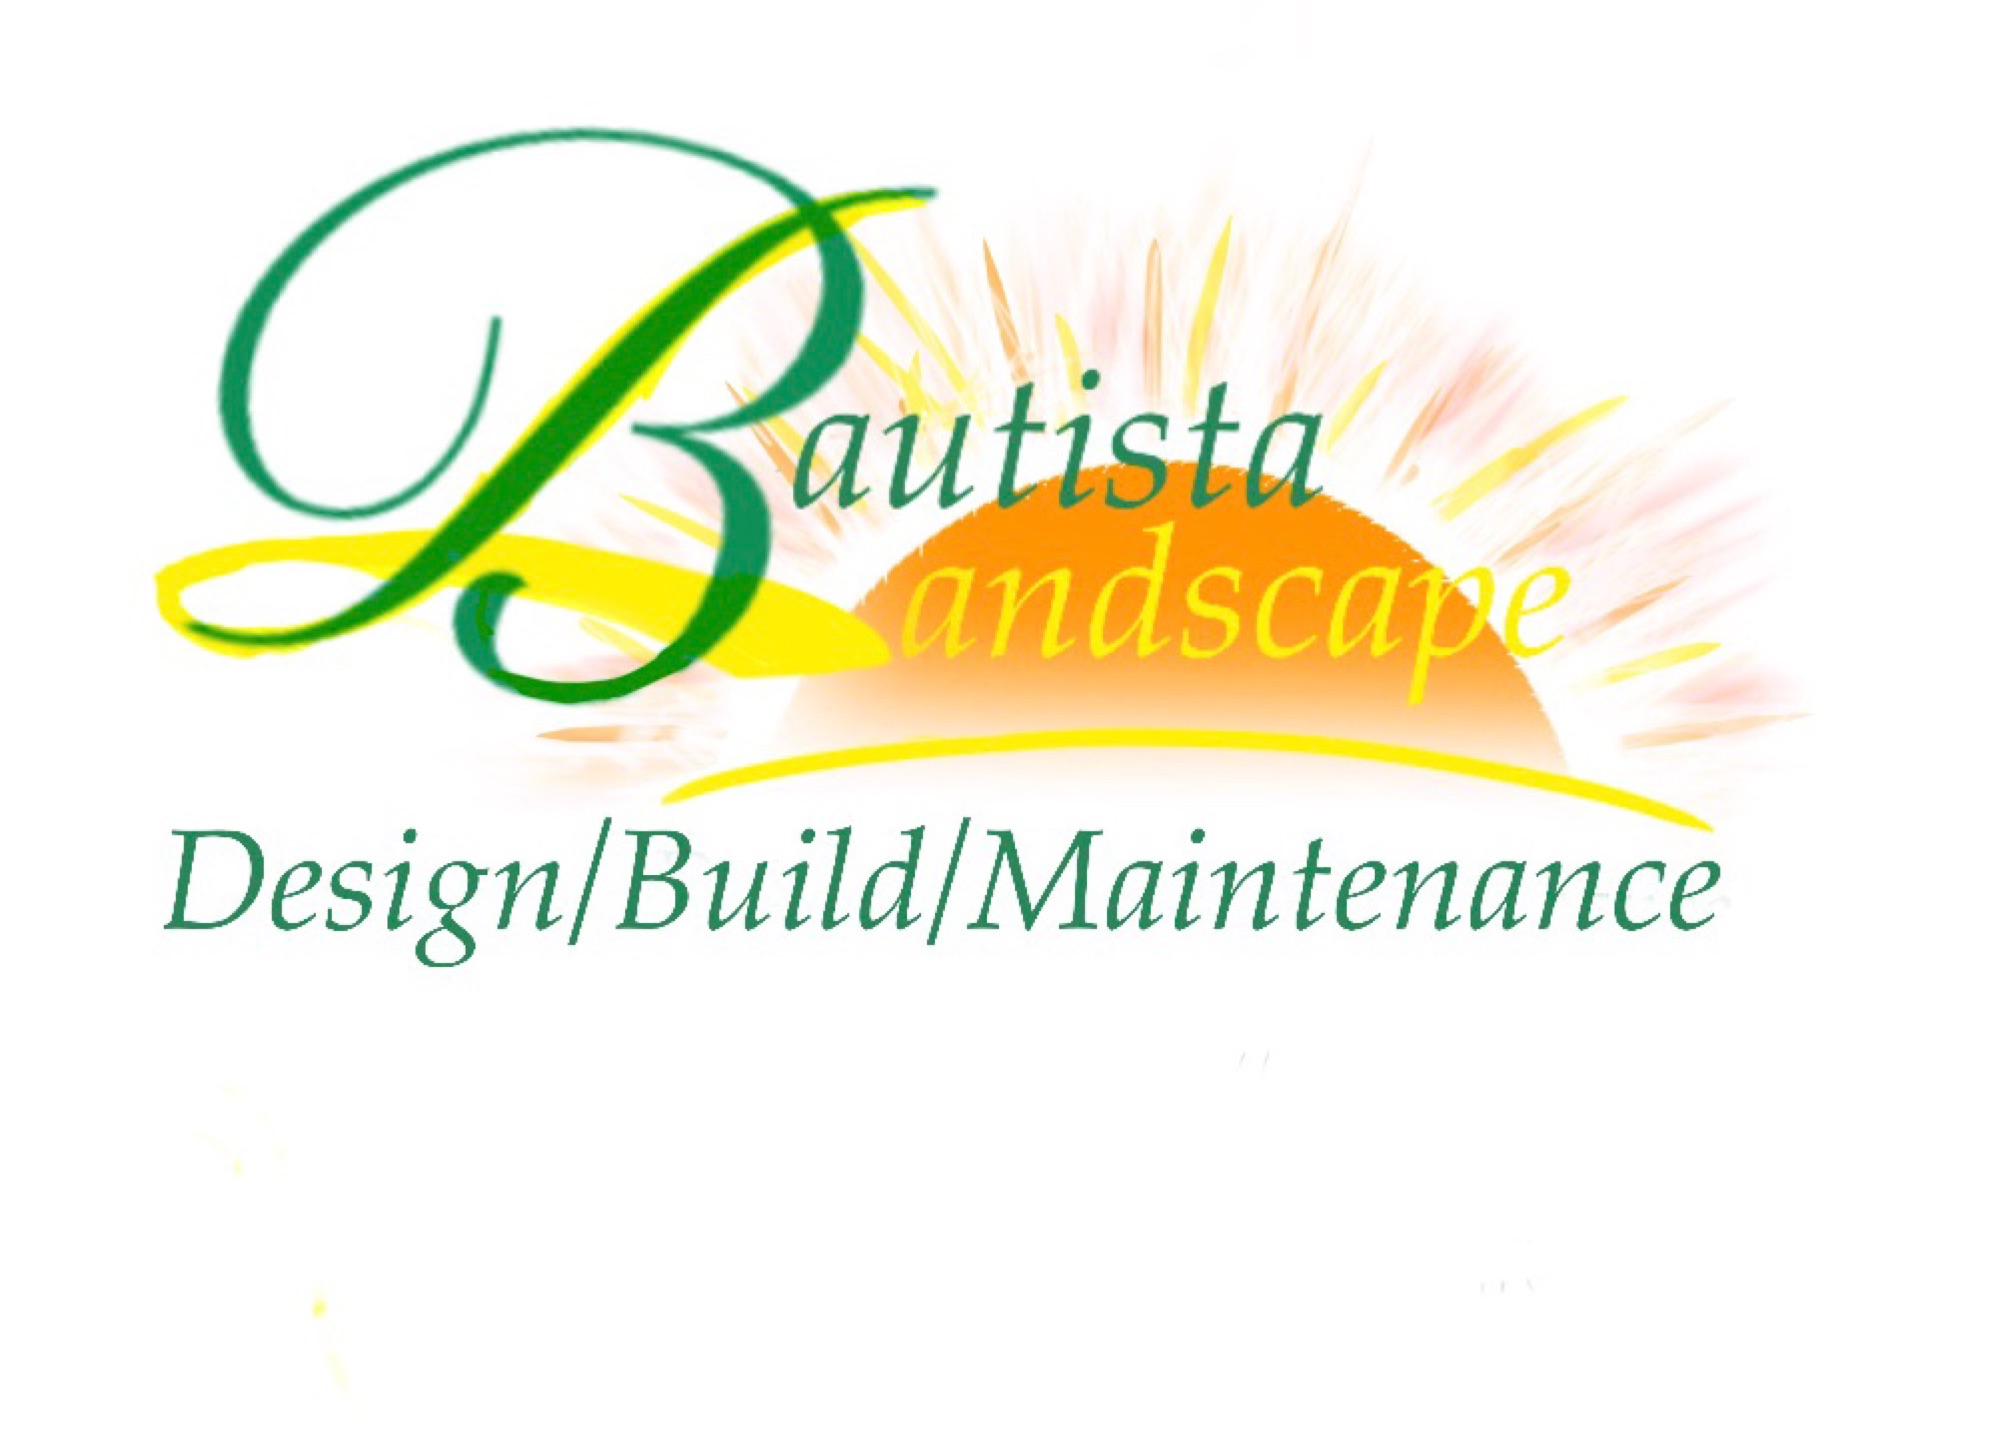 Bautista Landscaping Logo